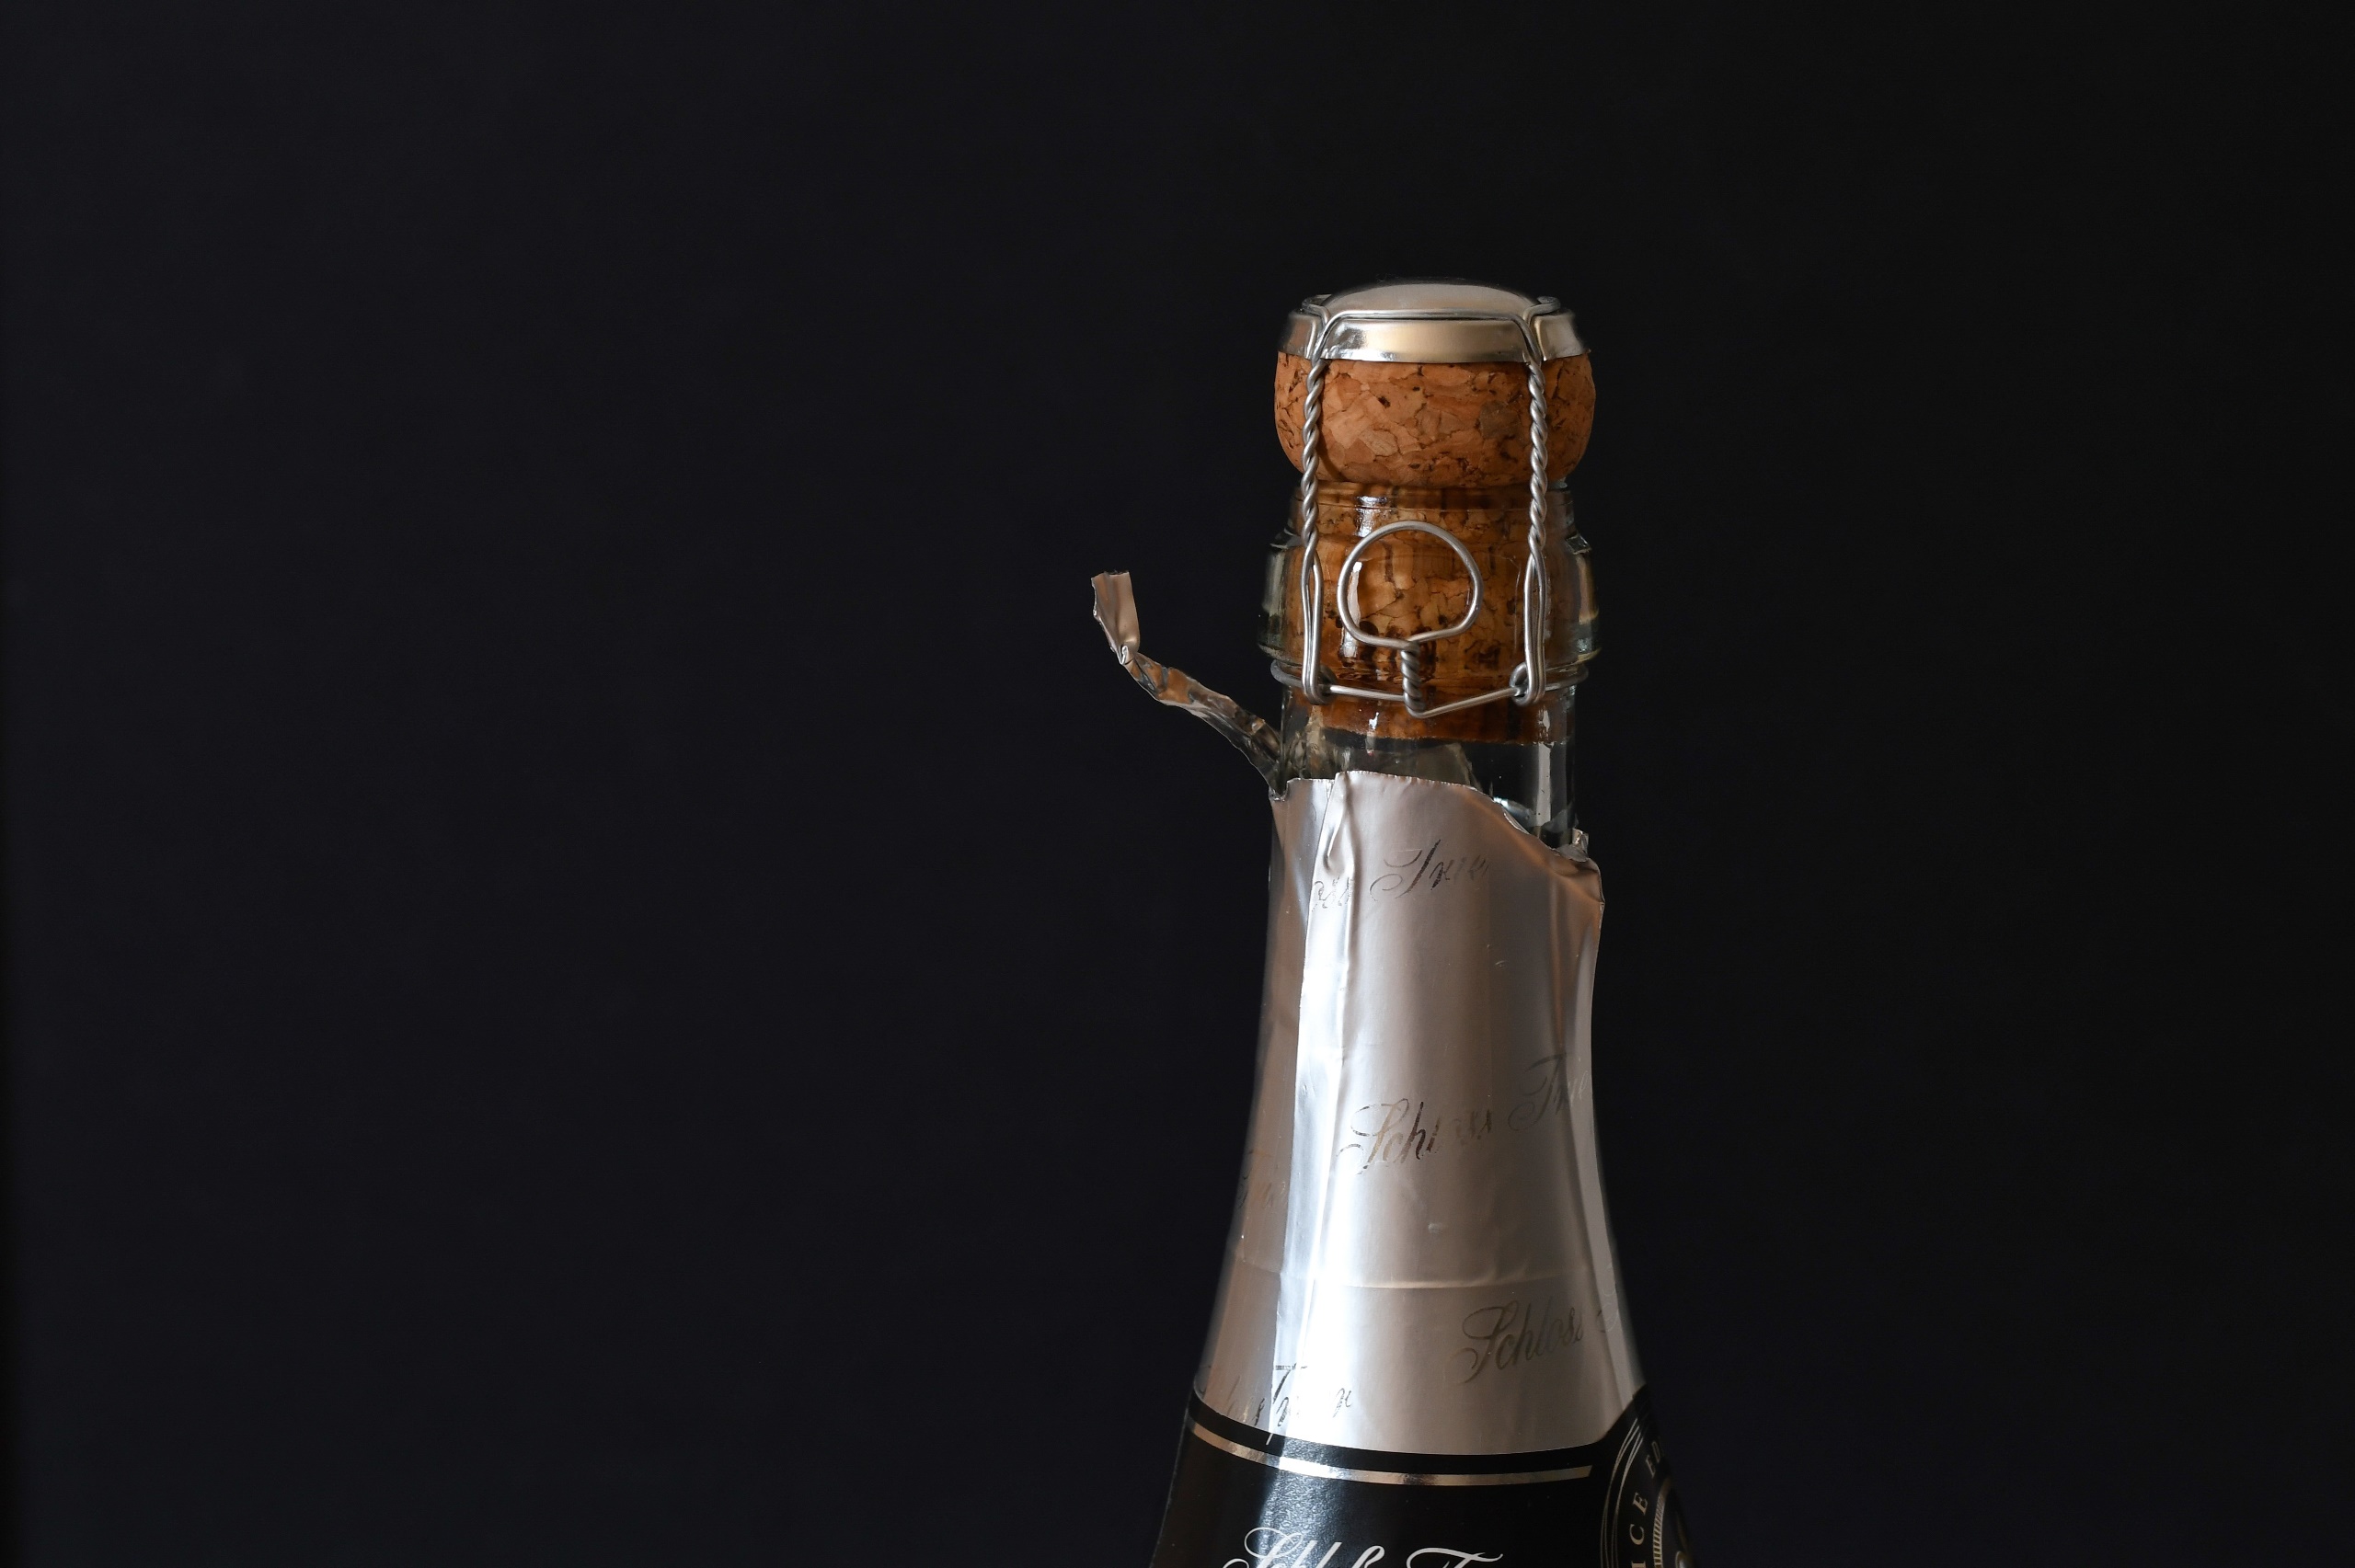 General 2560x1705 bottles simple background champagne food black background minimalism